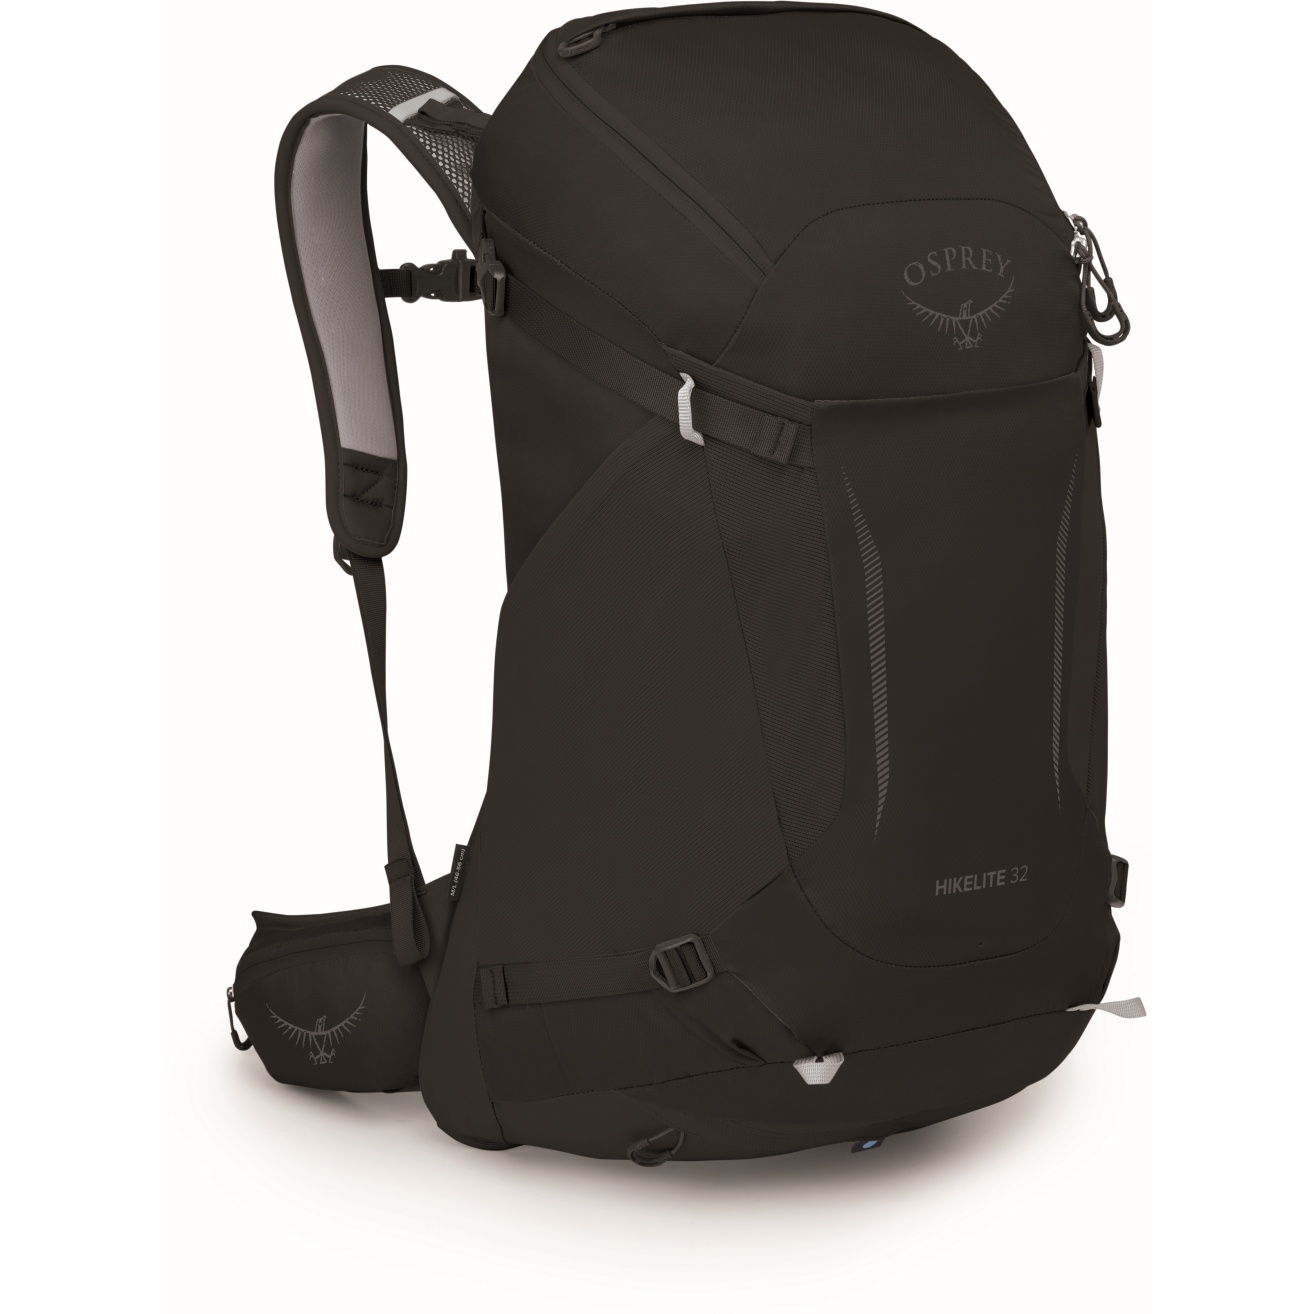 Picture of Osprey Hikelite 32 Backpack - Black - M/L